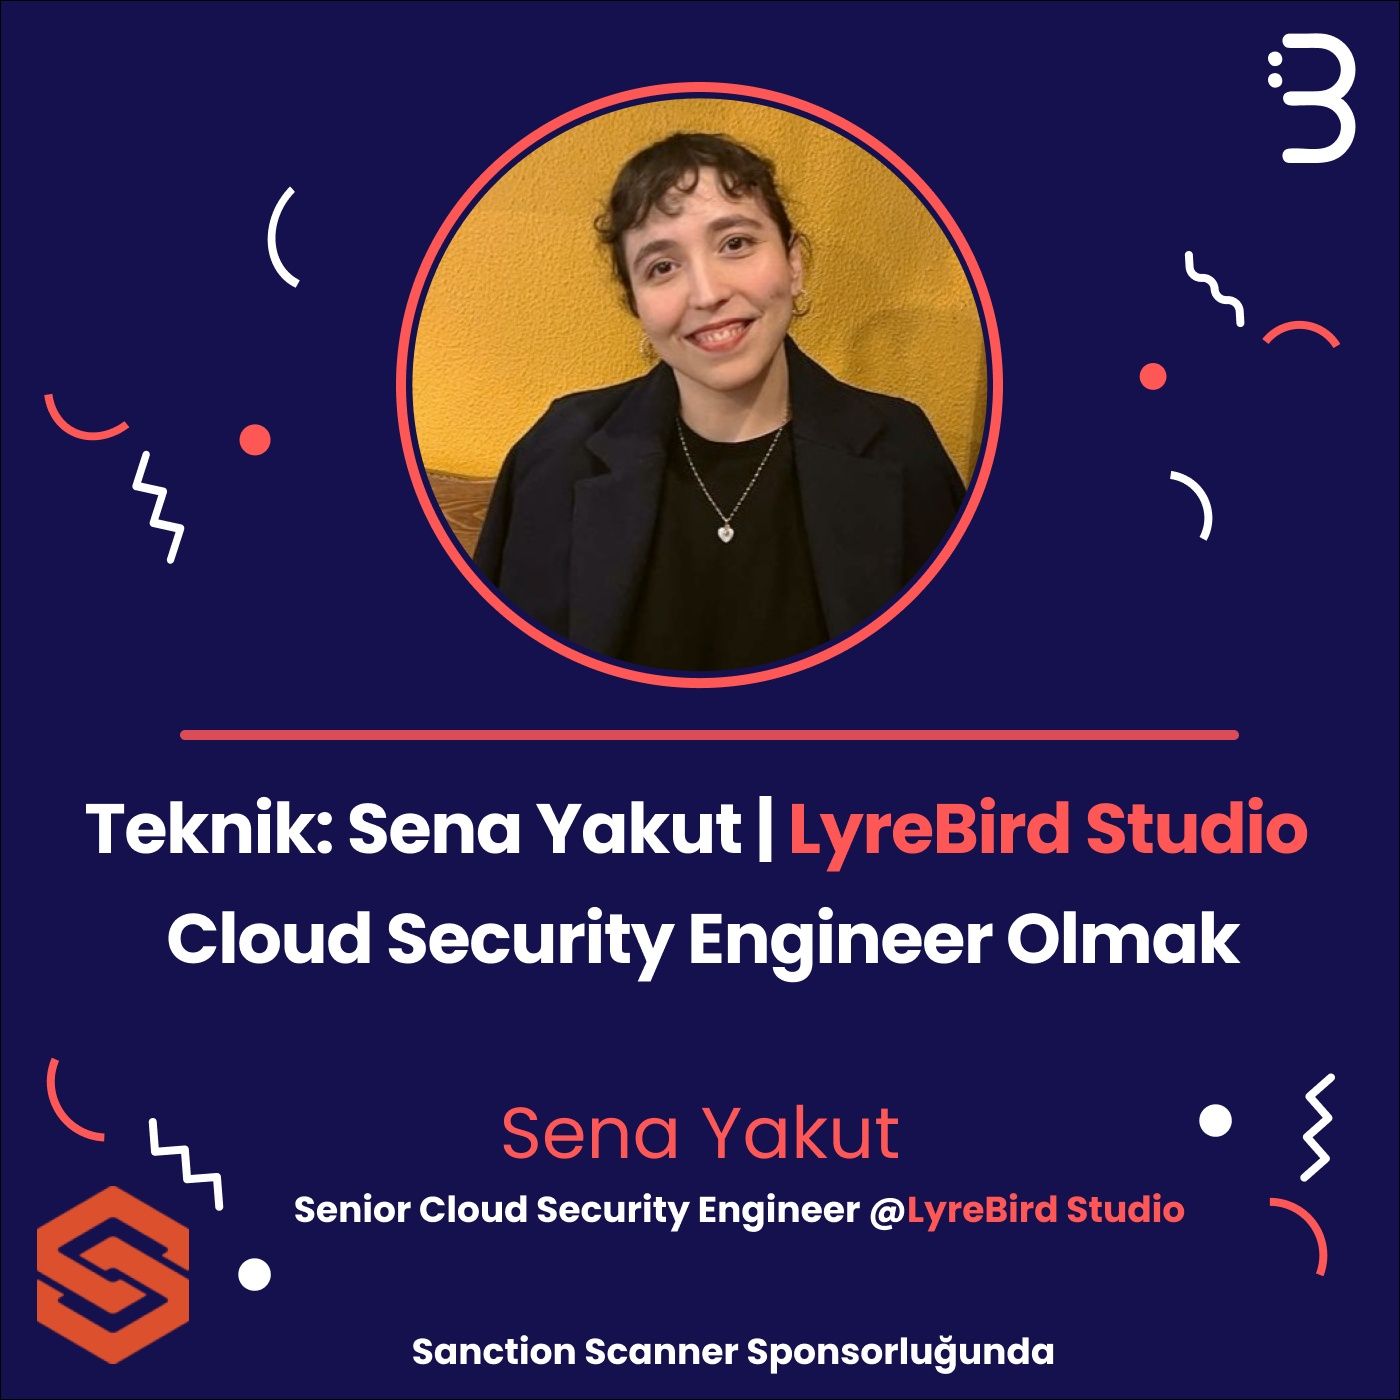 Teknik: Sena Yakut | Lyrebird Studio - Cloud Security Engineer Olmak